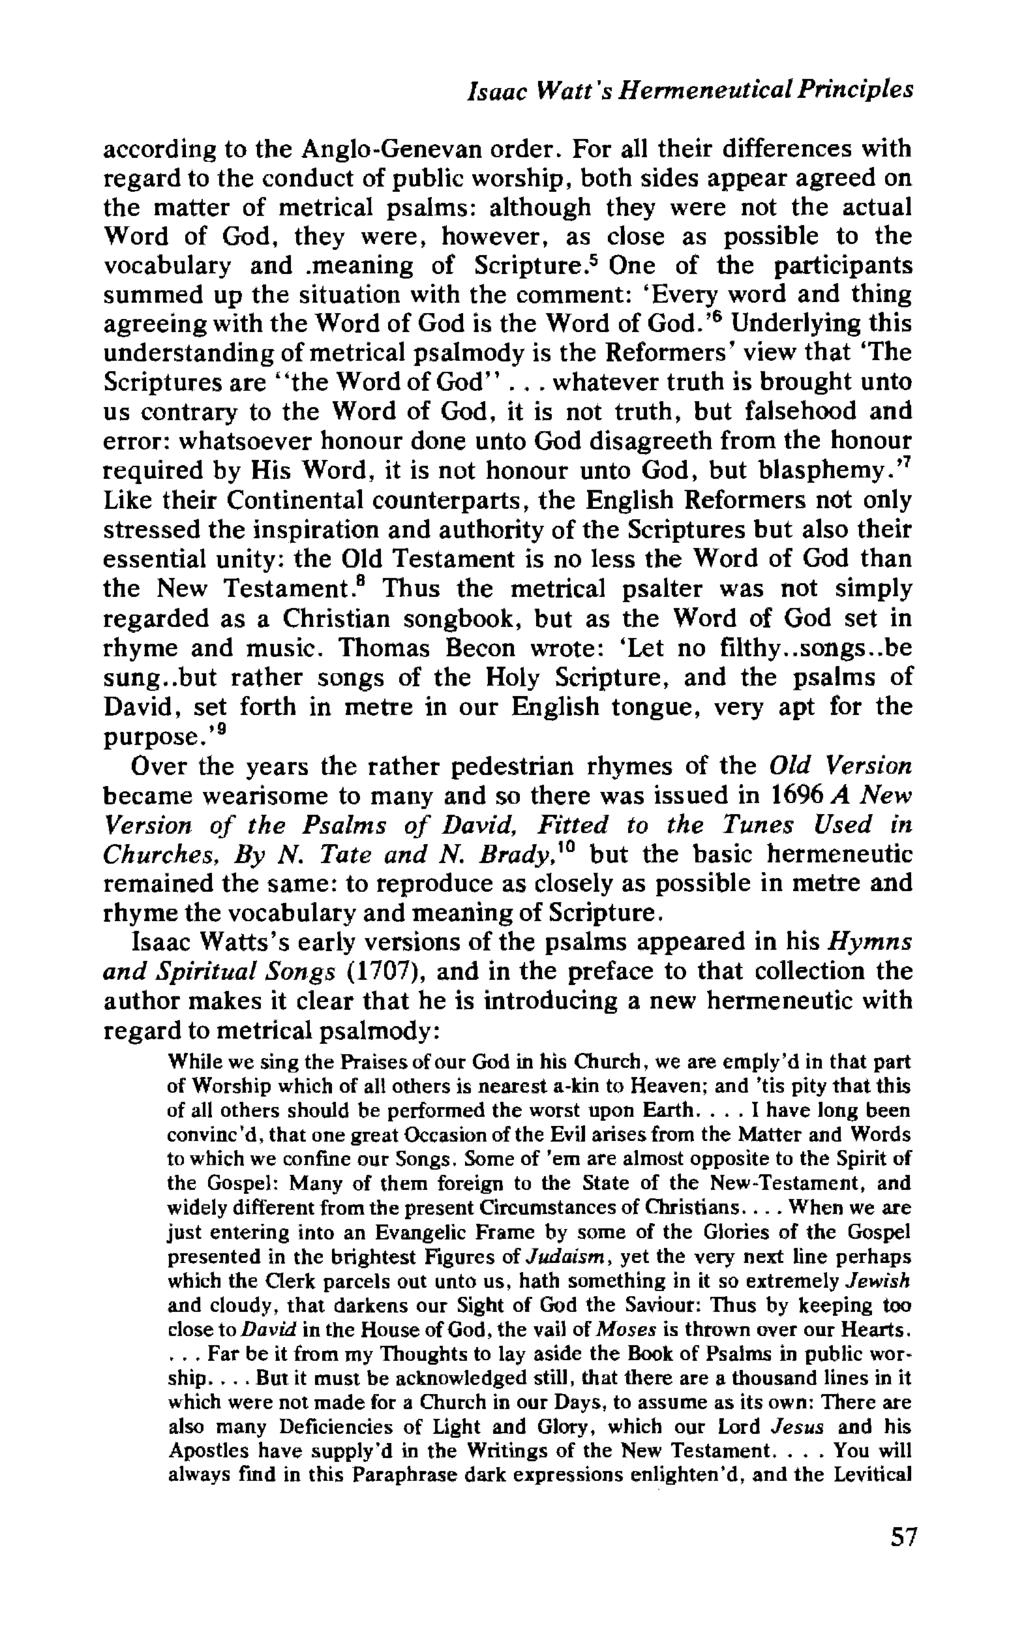 Isaac Watt's Hermeneutical Principles according to the Anglo-Genevan order.